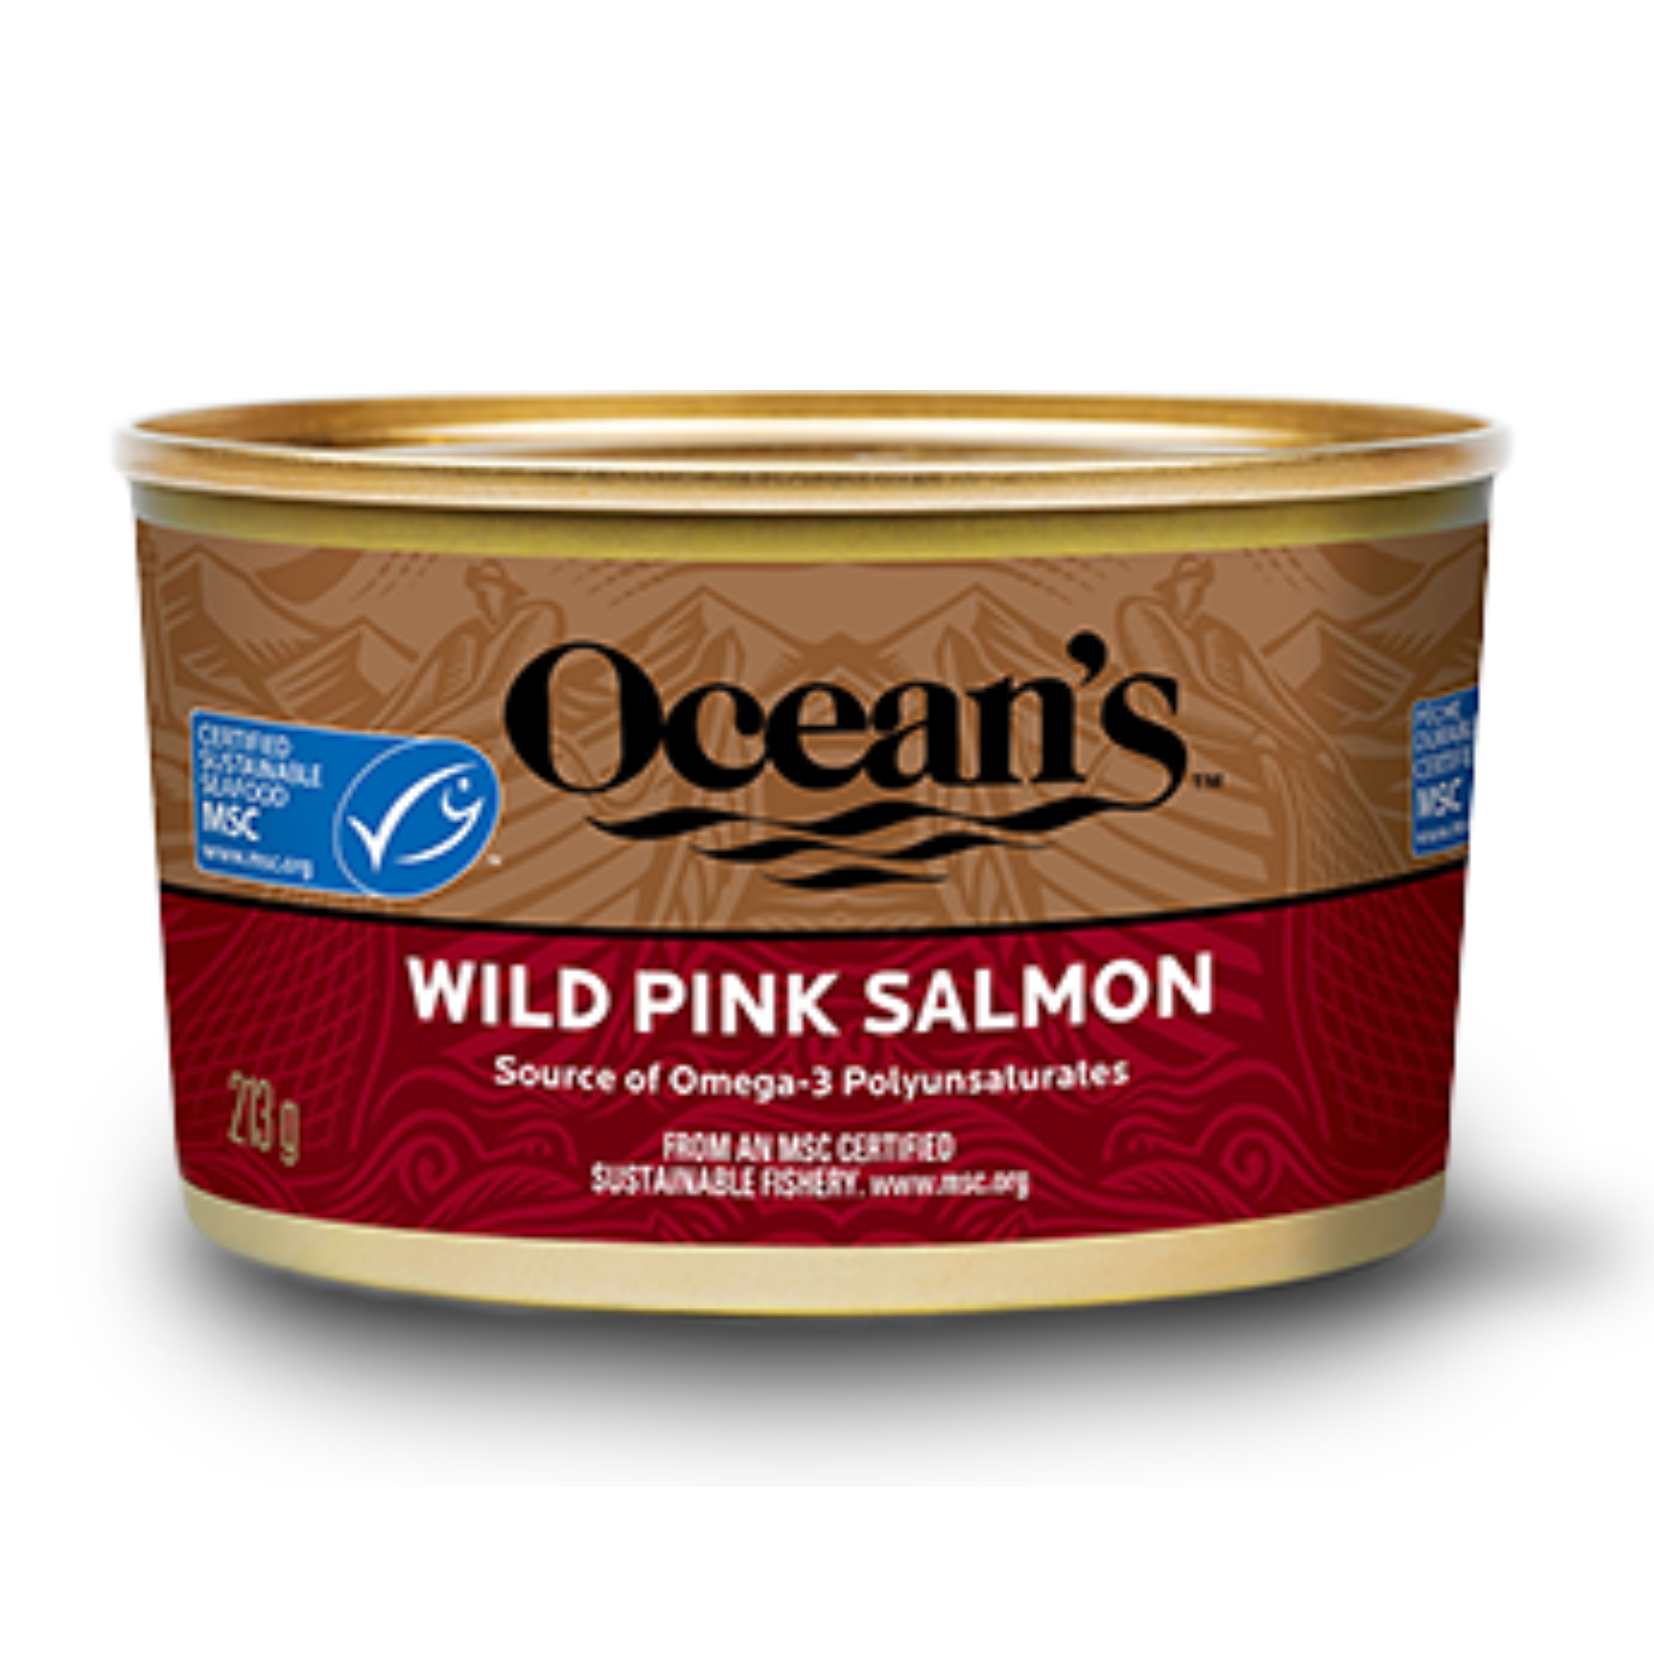 Ocean's Wild Pink Salmon